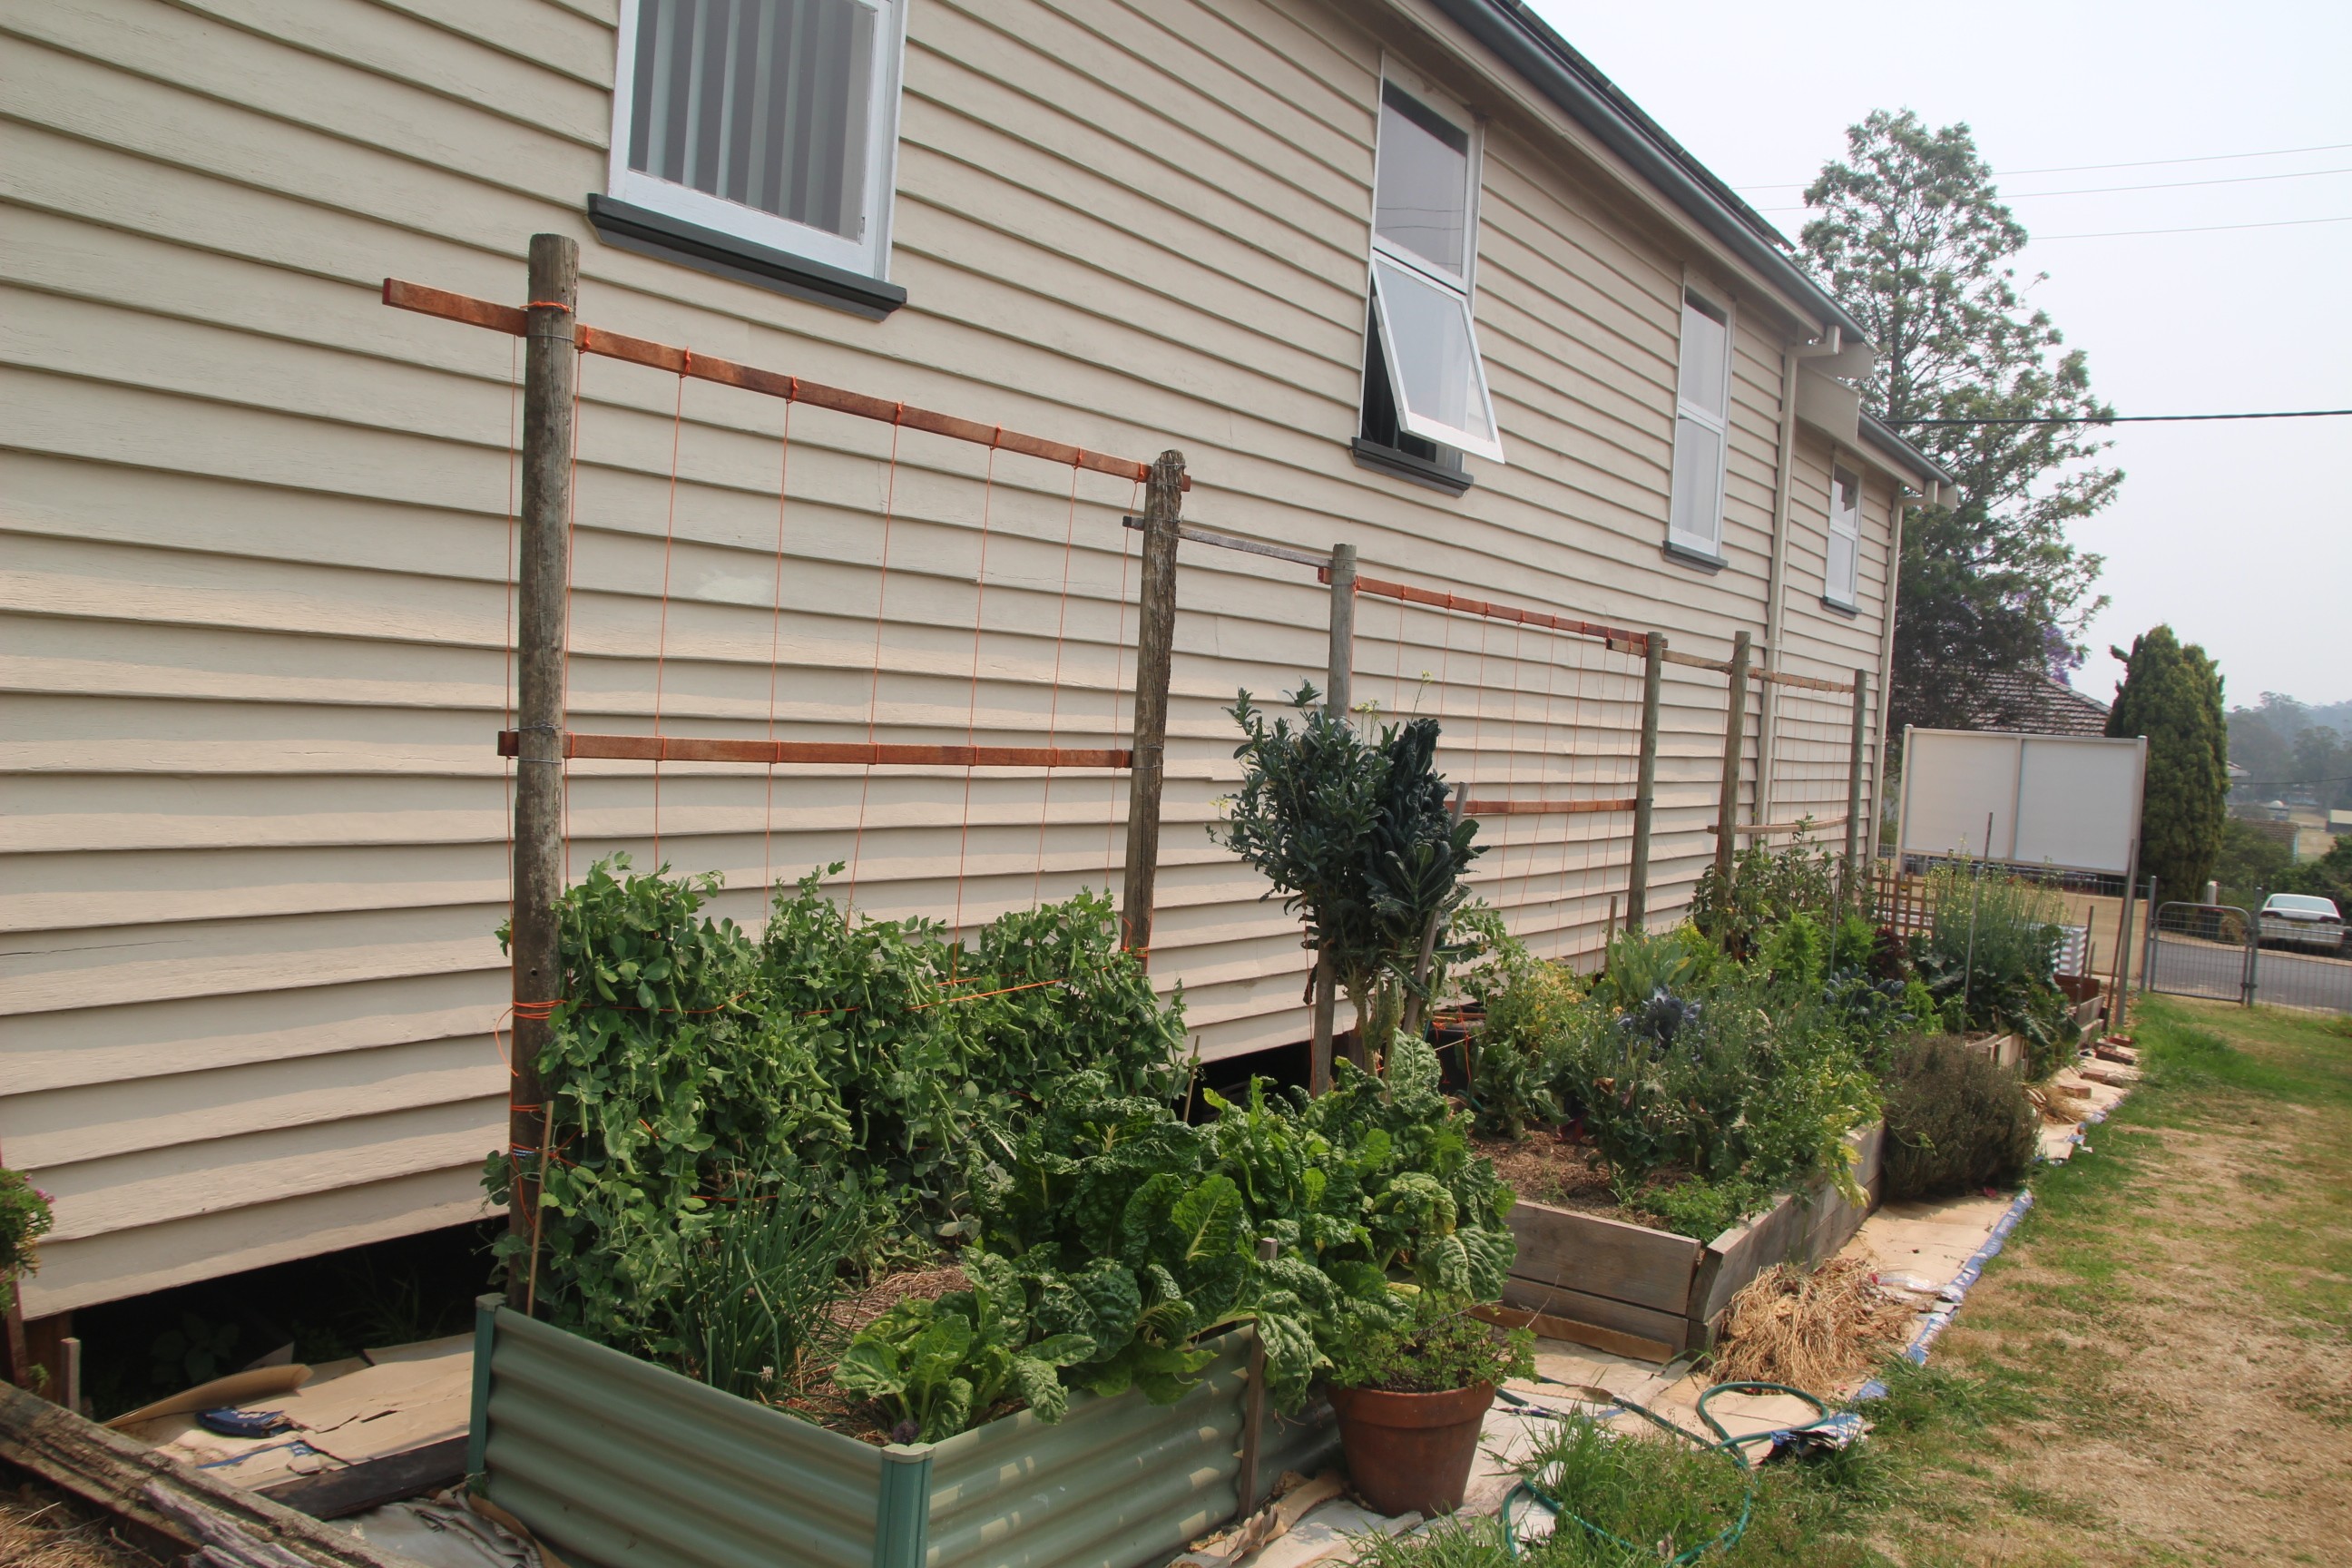 New drought hardy garden beds for veg at Moruya Community Garden